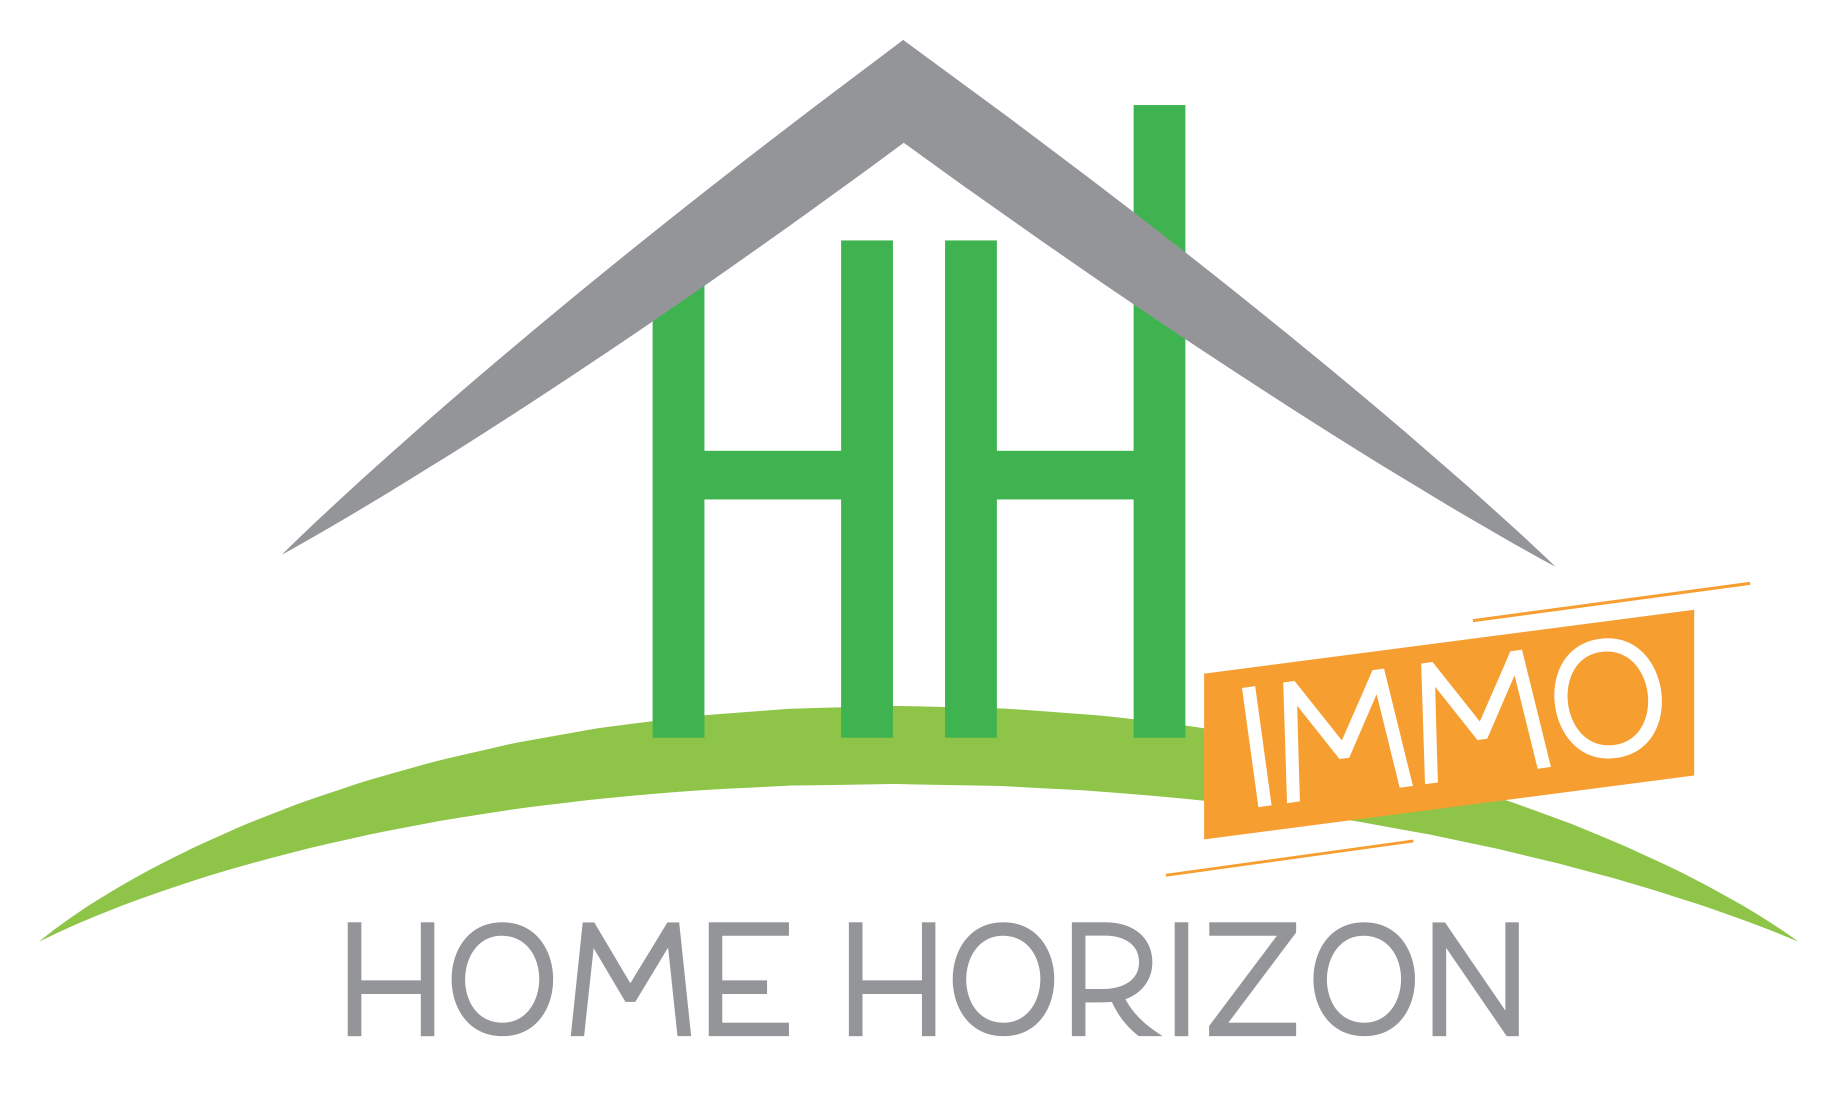 Home Horizon Immo